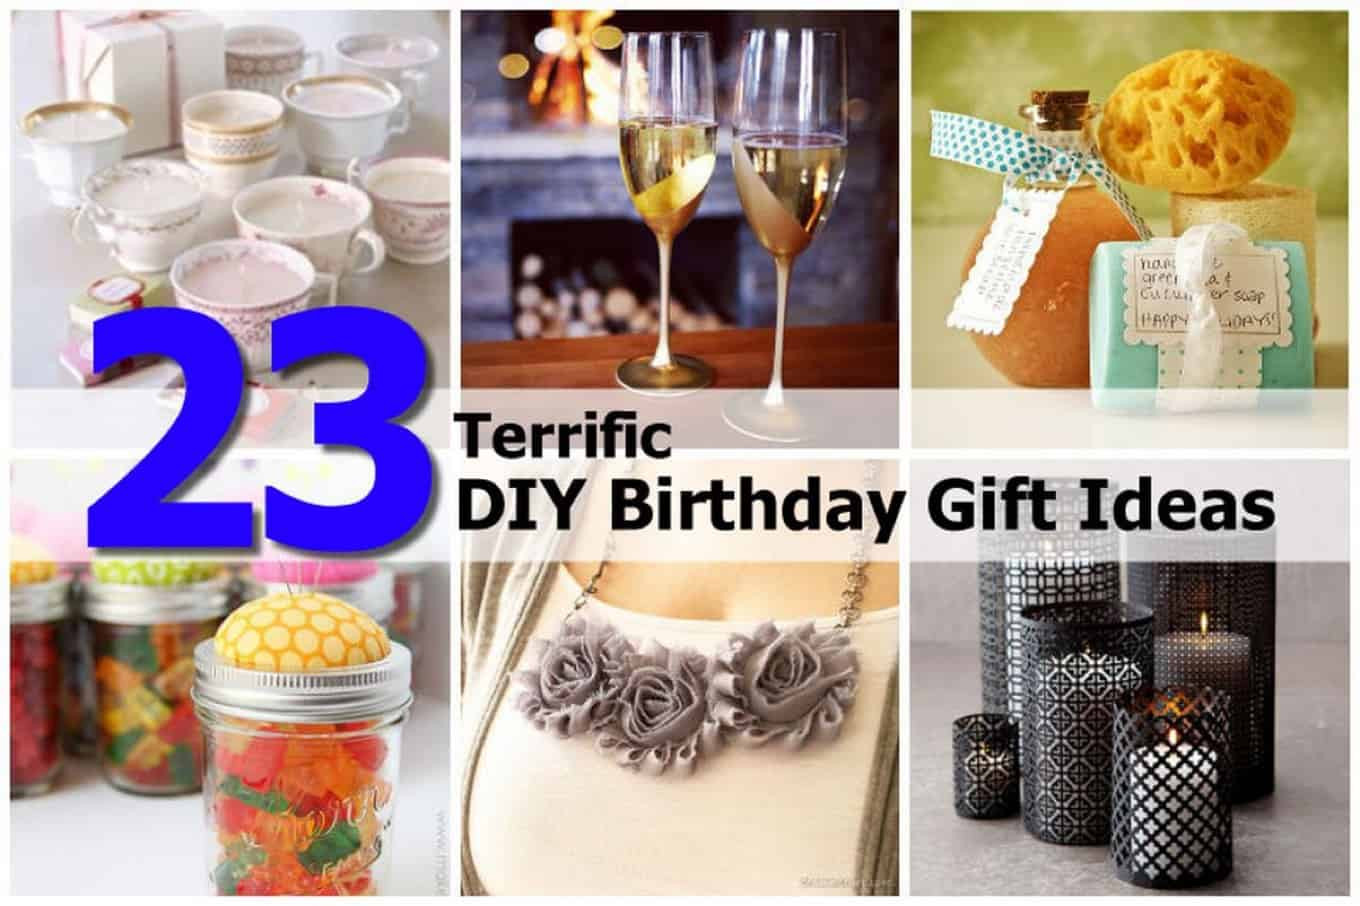 Best ideas about DIY Birthday Gift Idea
. Save or Pin 23 Terrific DIY Birthday Gift Ideas Now.